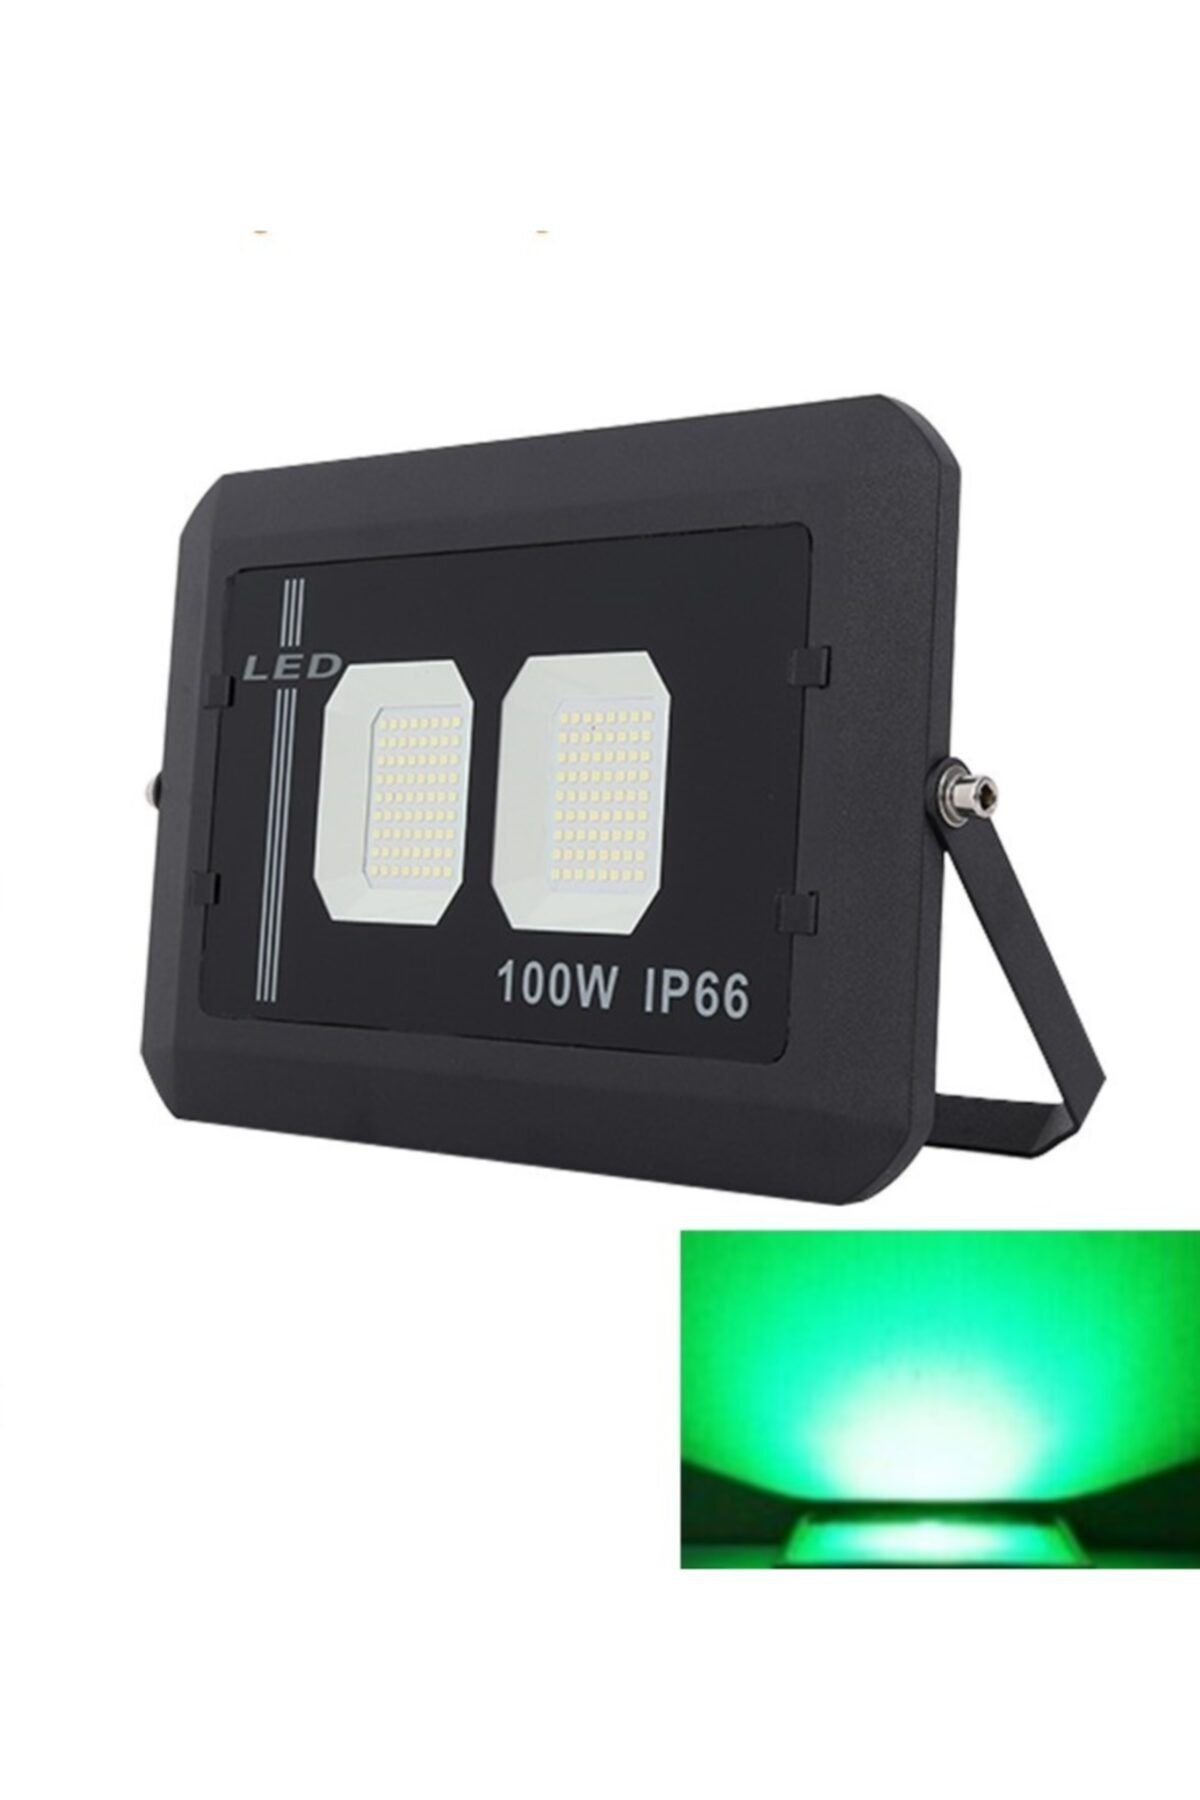 qenos 100 Watt Smd Led Projektör 10500 Lumen Ip 66 - 525 Kelvın – Yeşil Işık 1 Adet